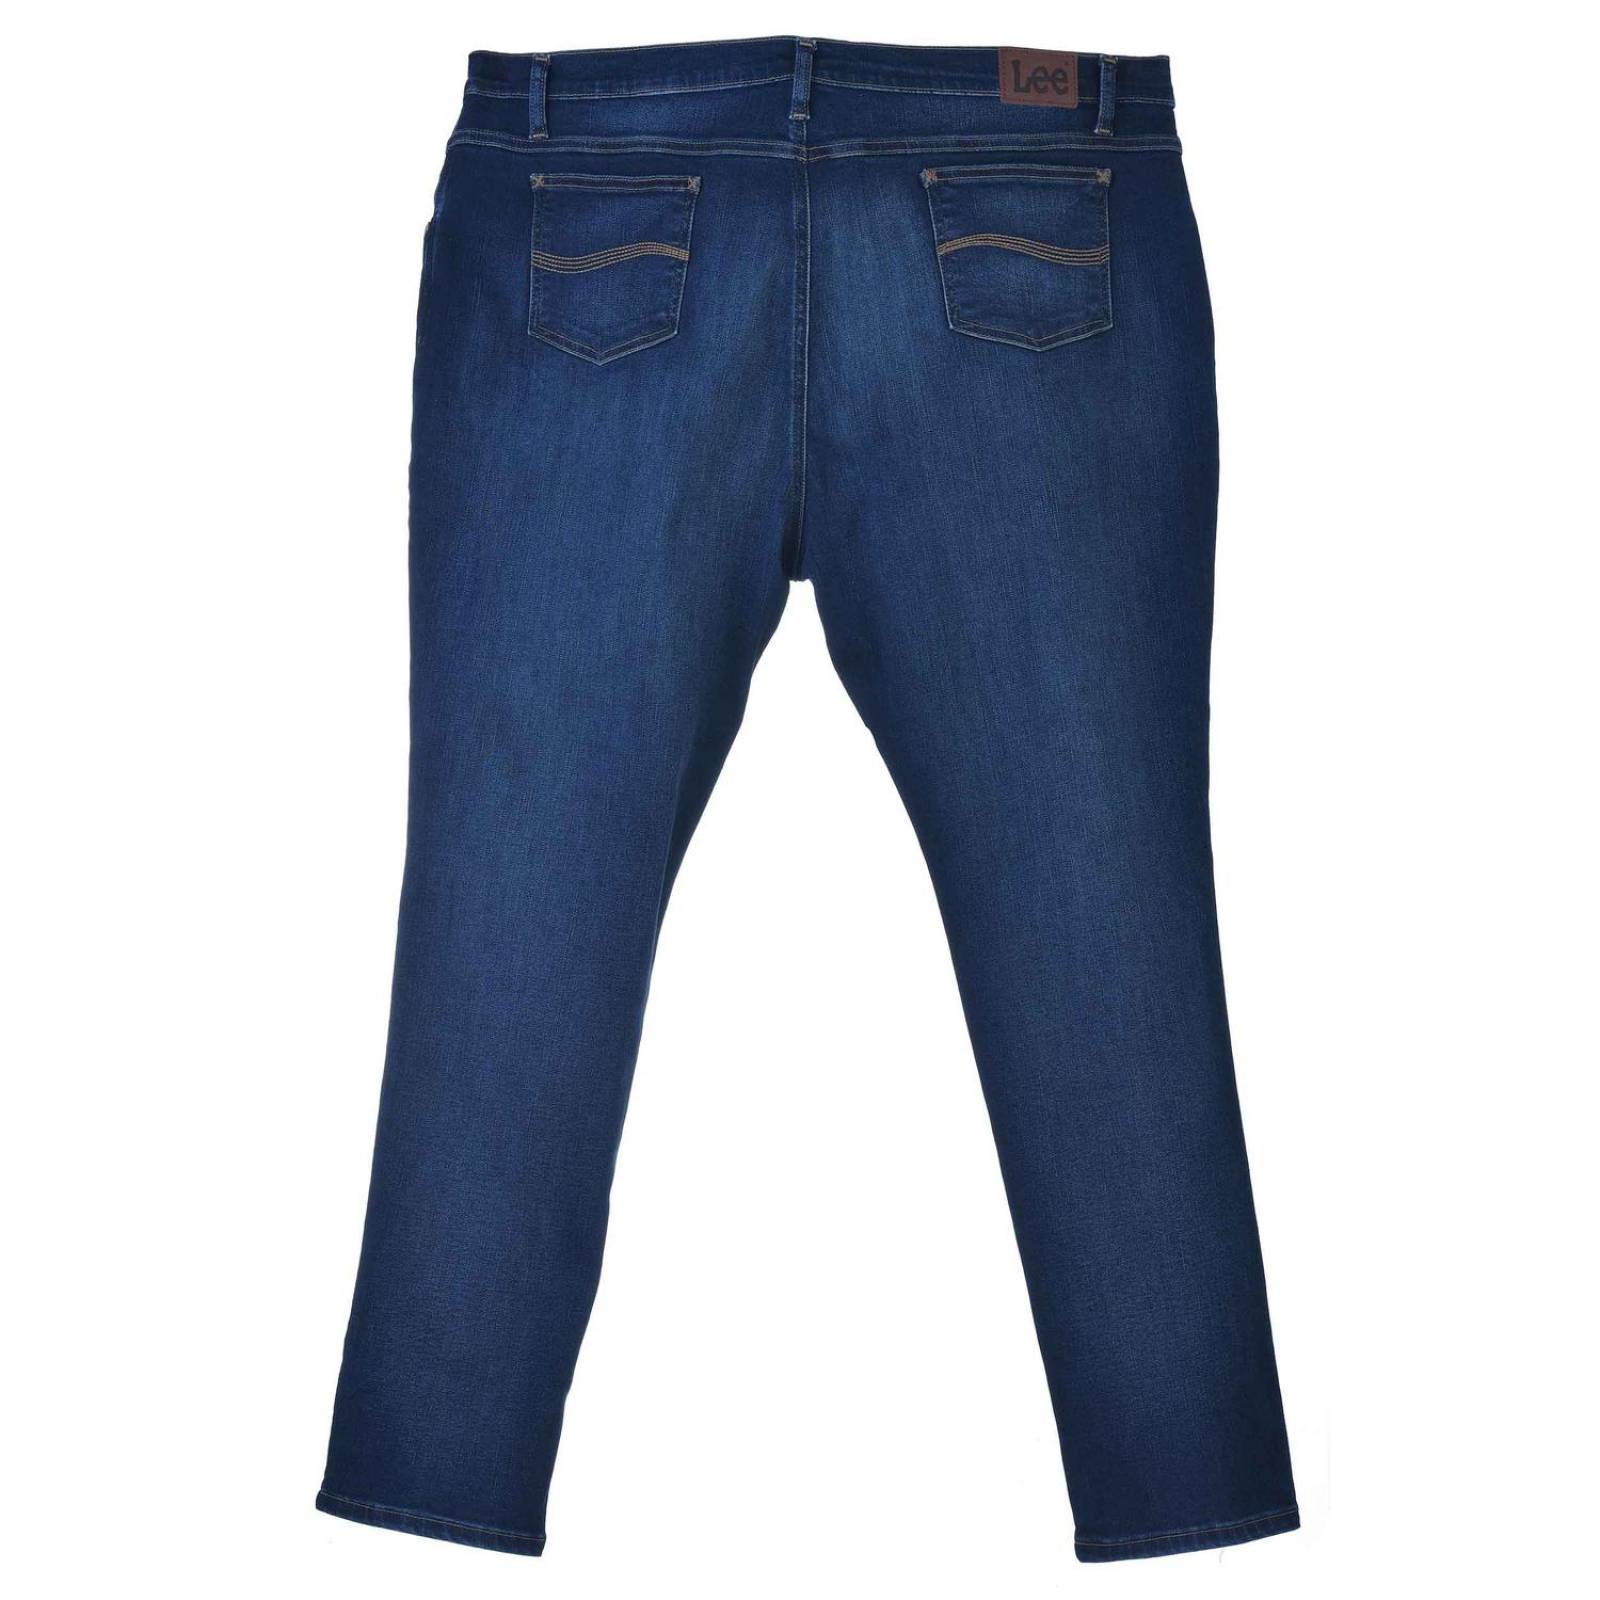 Pantalon Jeans Skinny Cintura Alta Lee Mujer Ri46